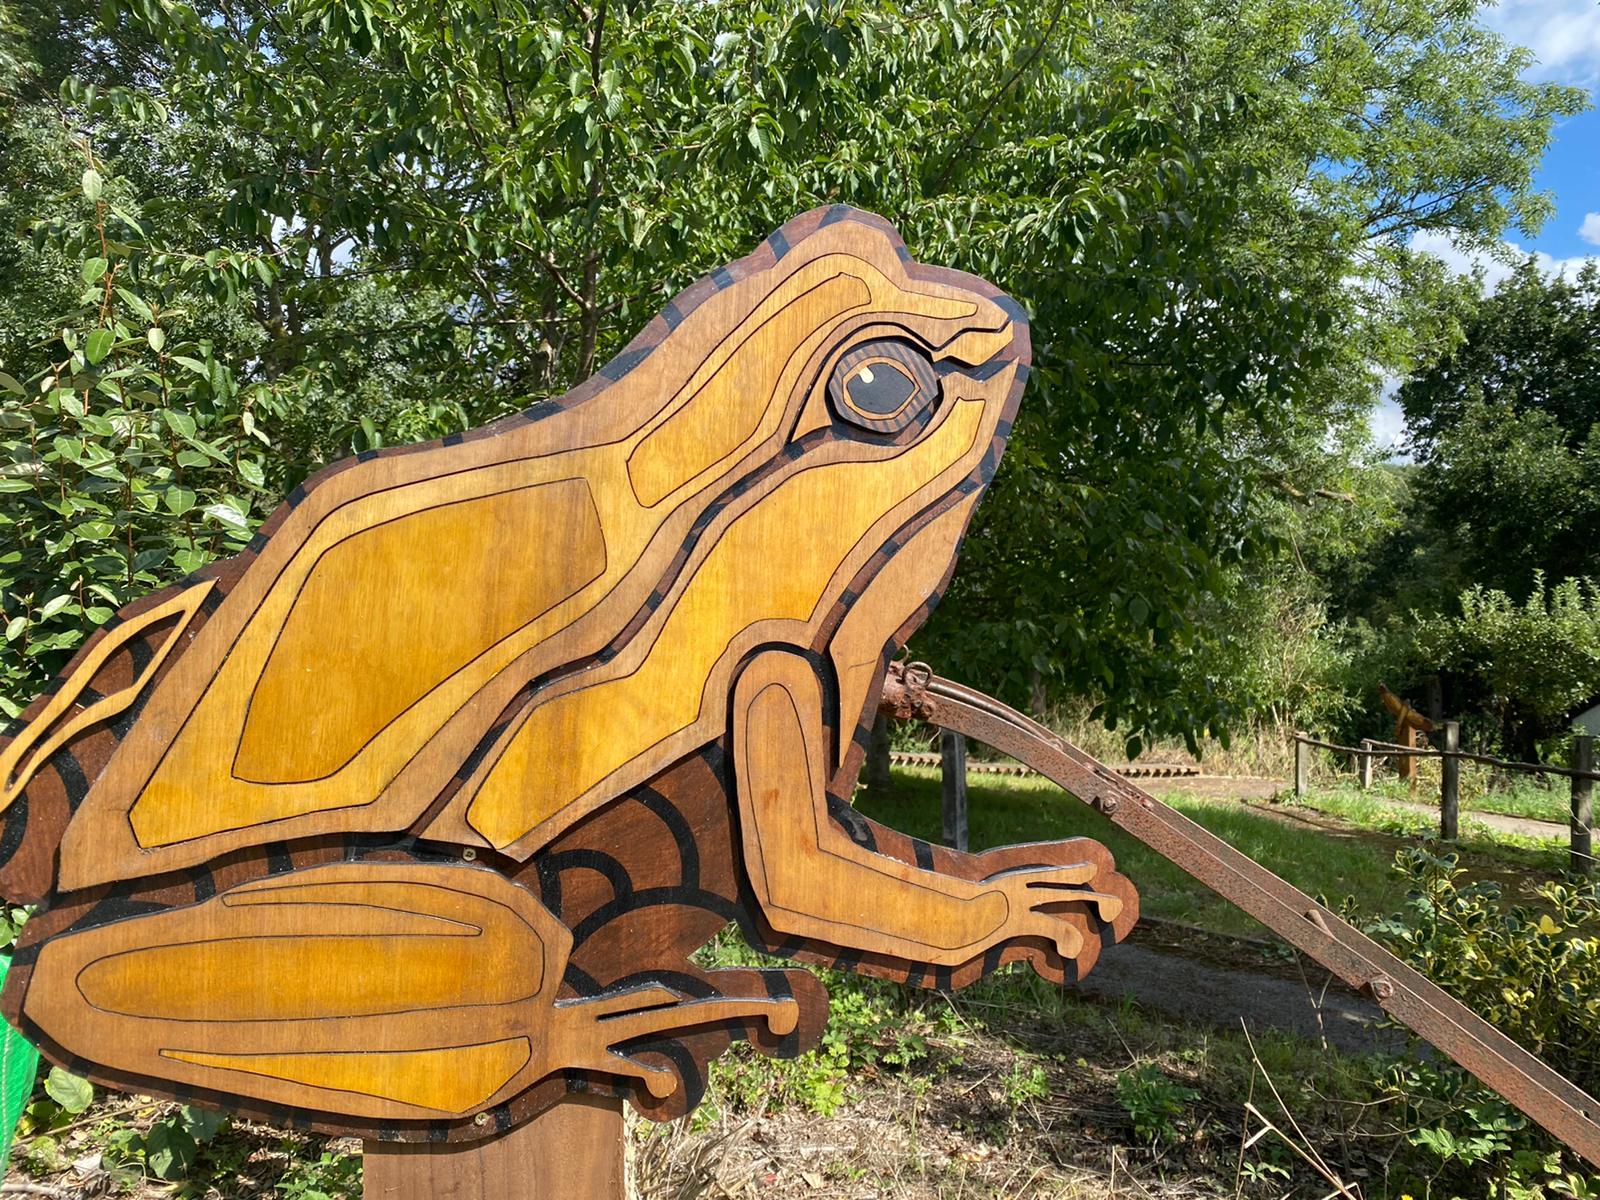 Common frog sculpture